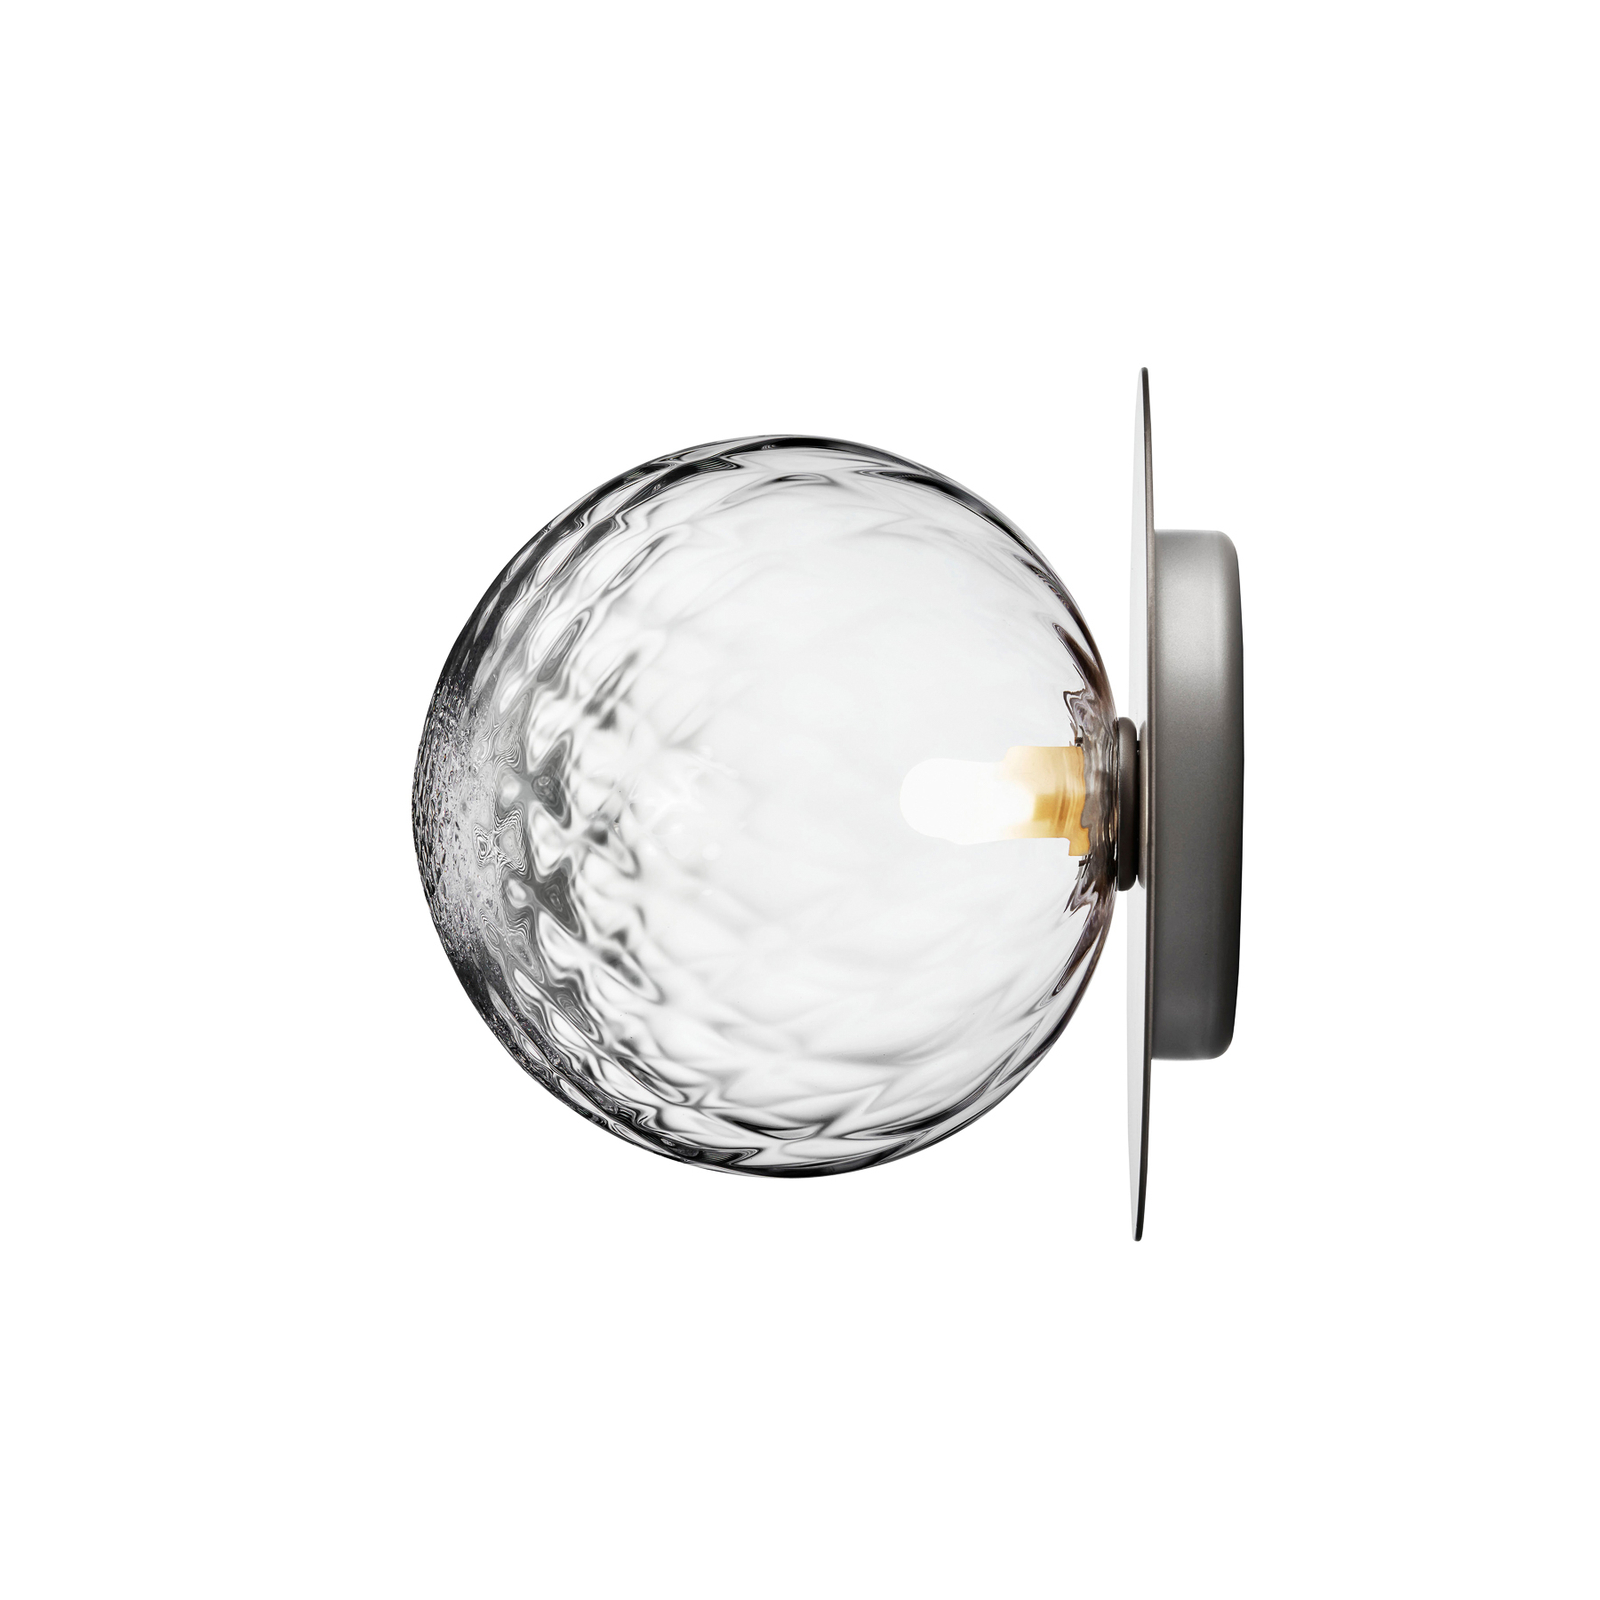 Nuura Liila 1 Large wall light 1-bulb silver/clear